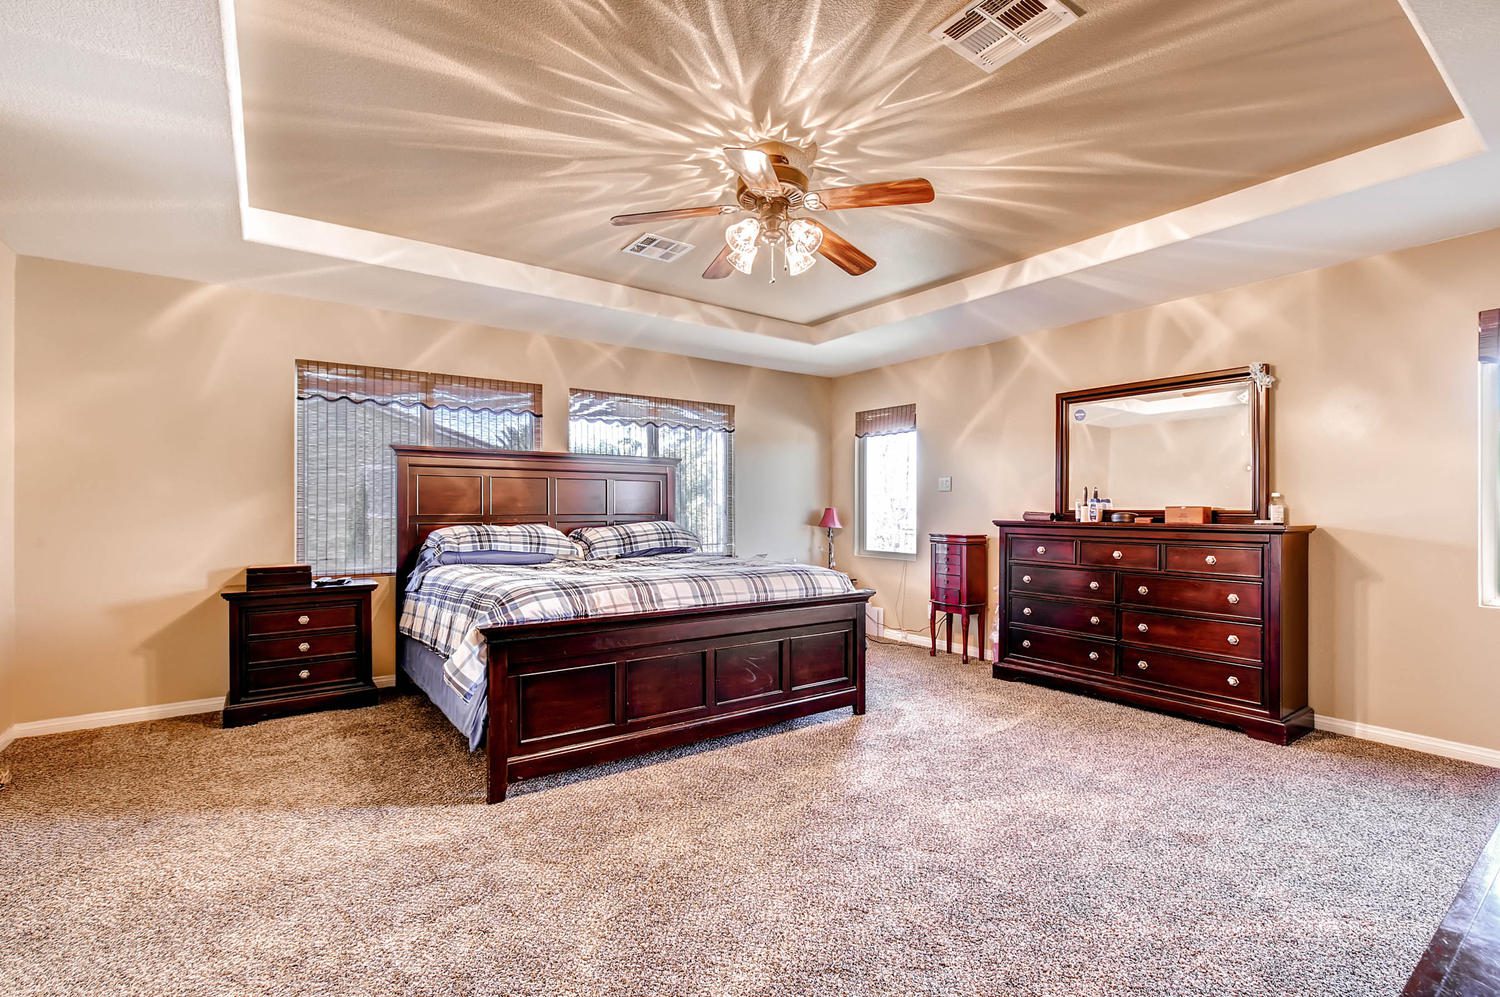 5 Bedroom Under 500K - Las Vegas Real Estate